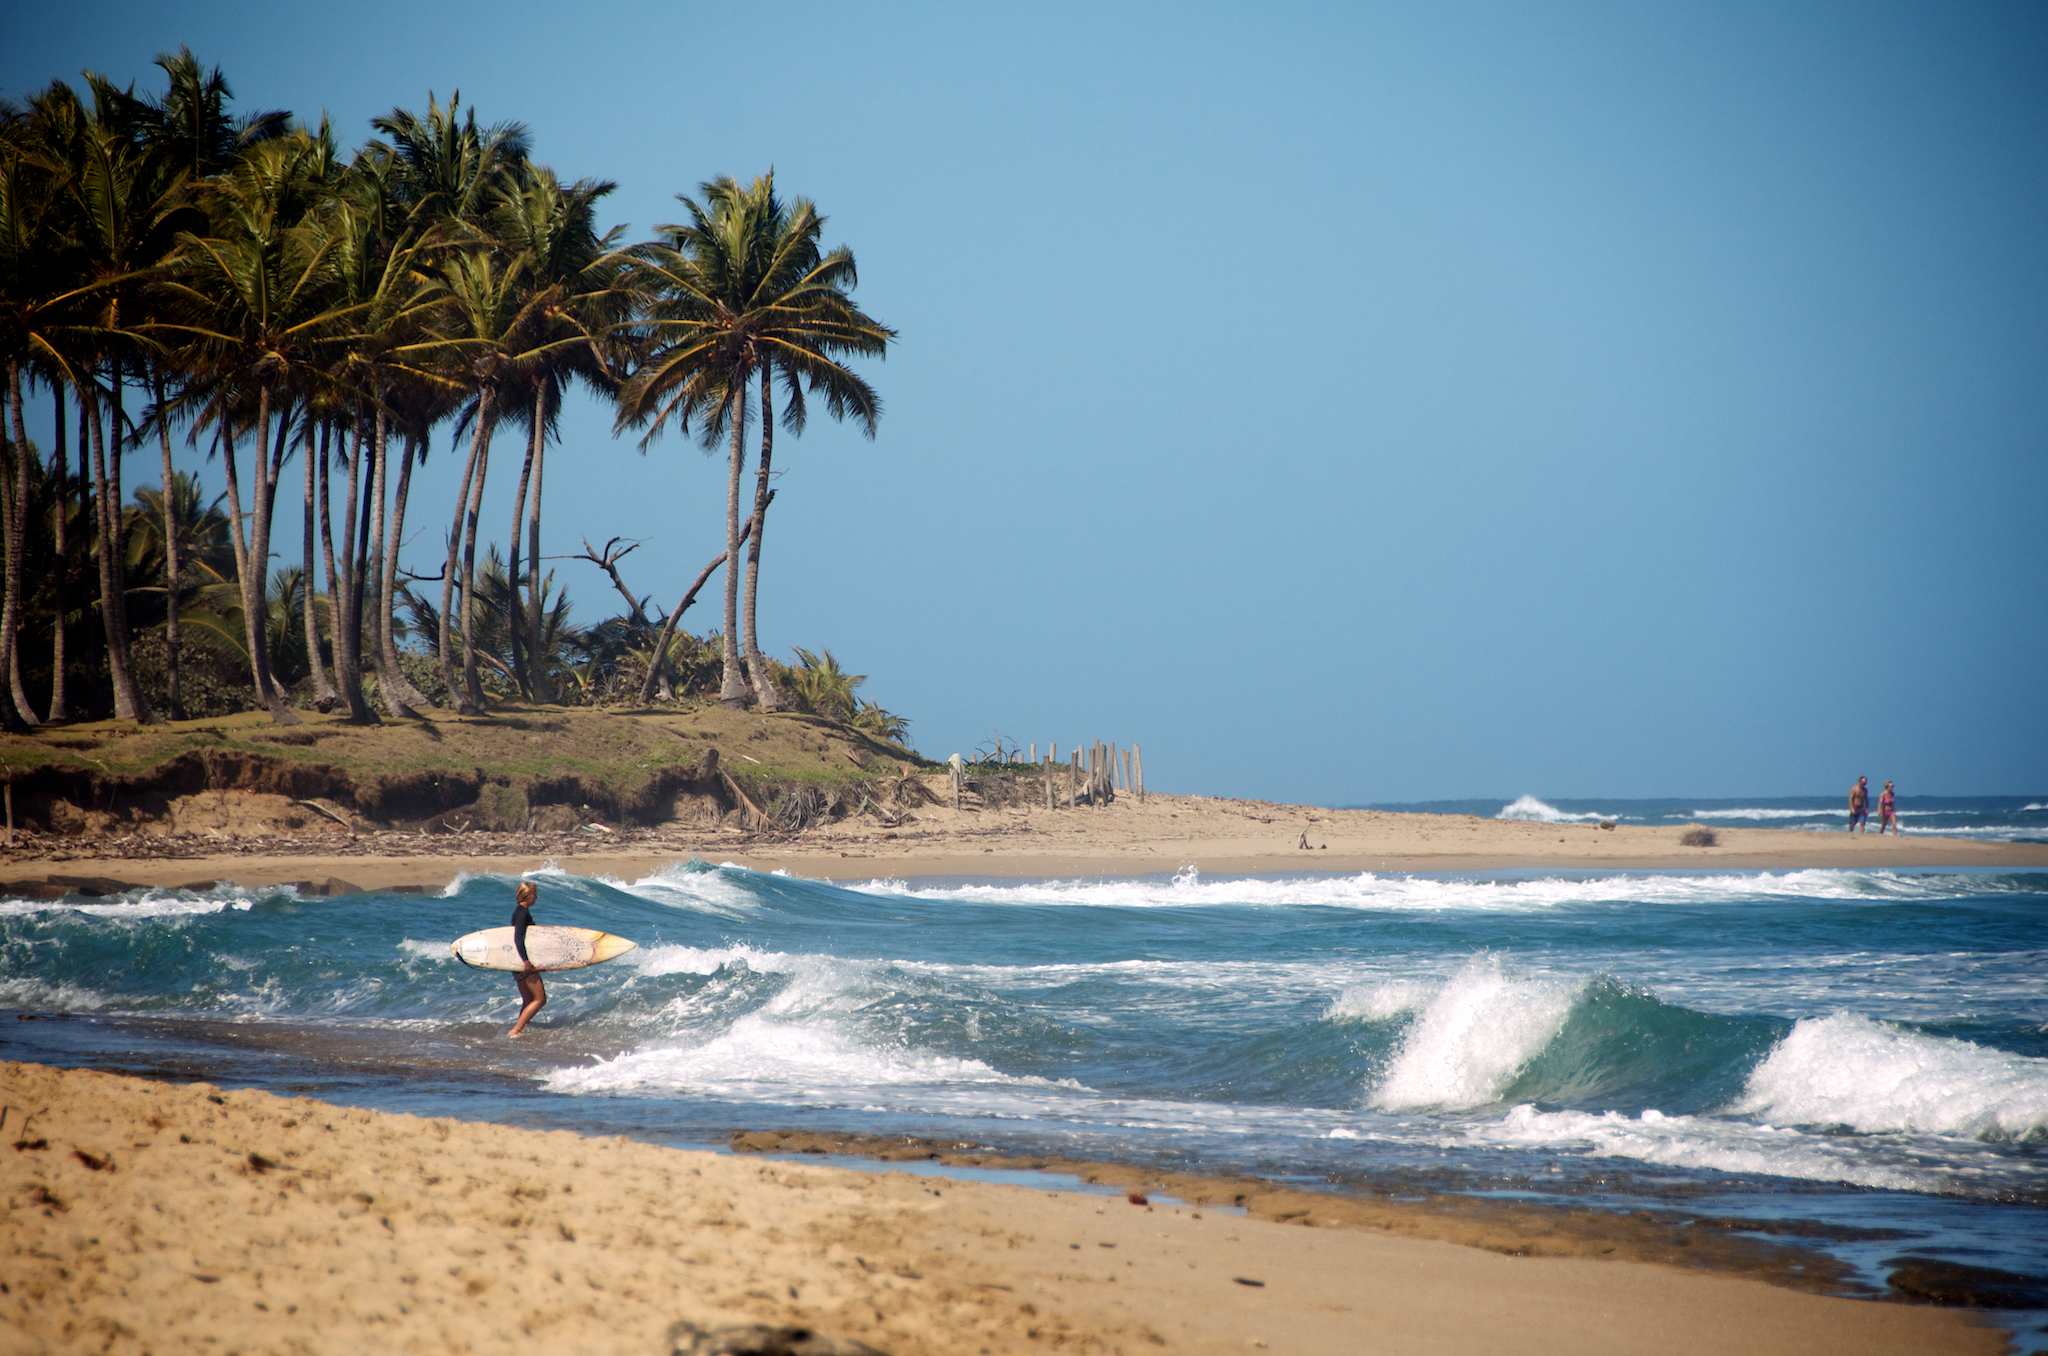 Dominican Republic surfing, North shore